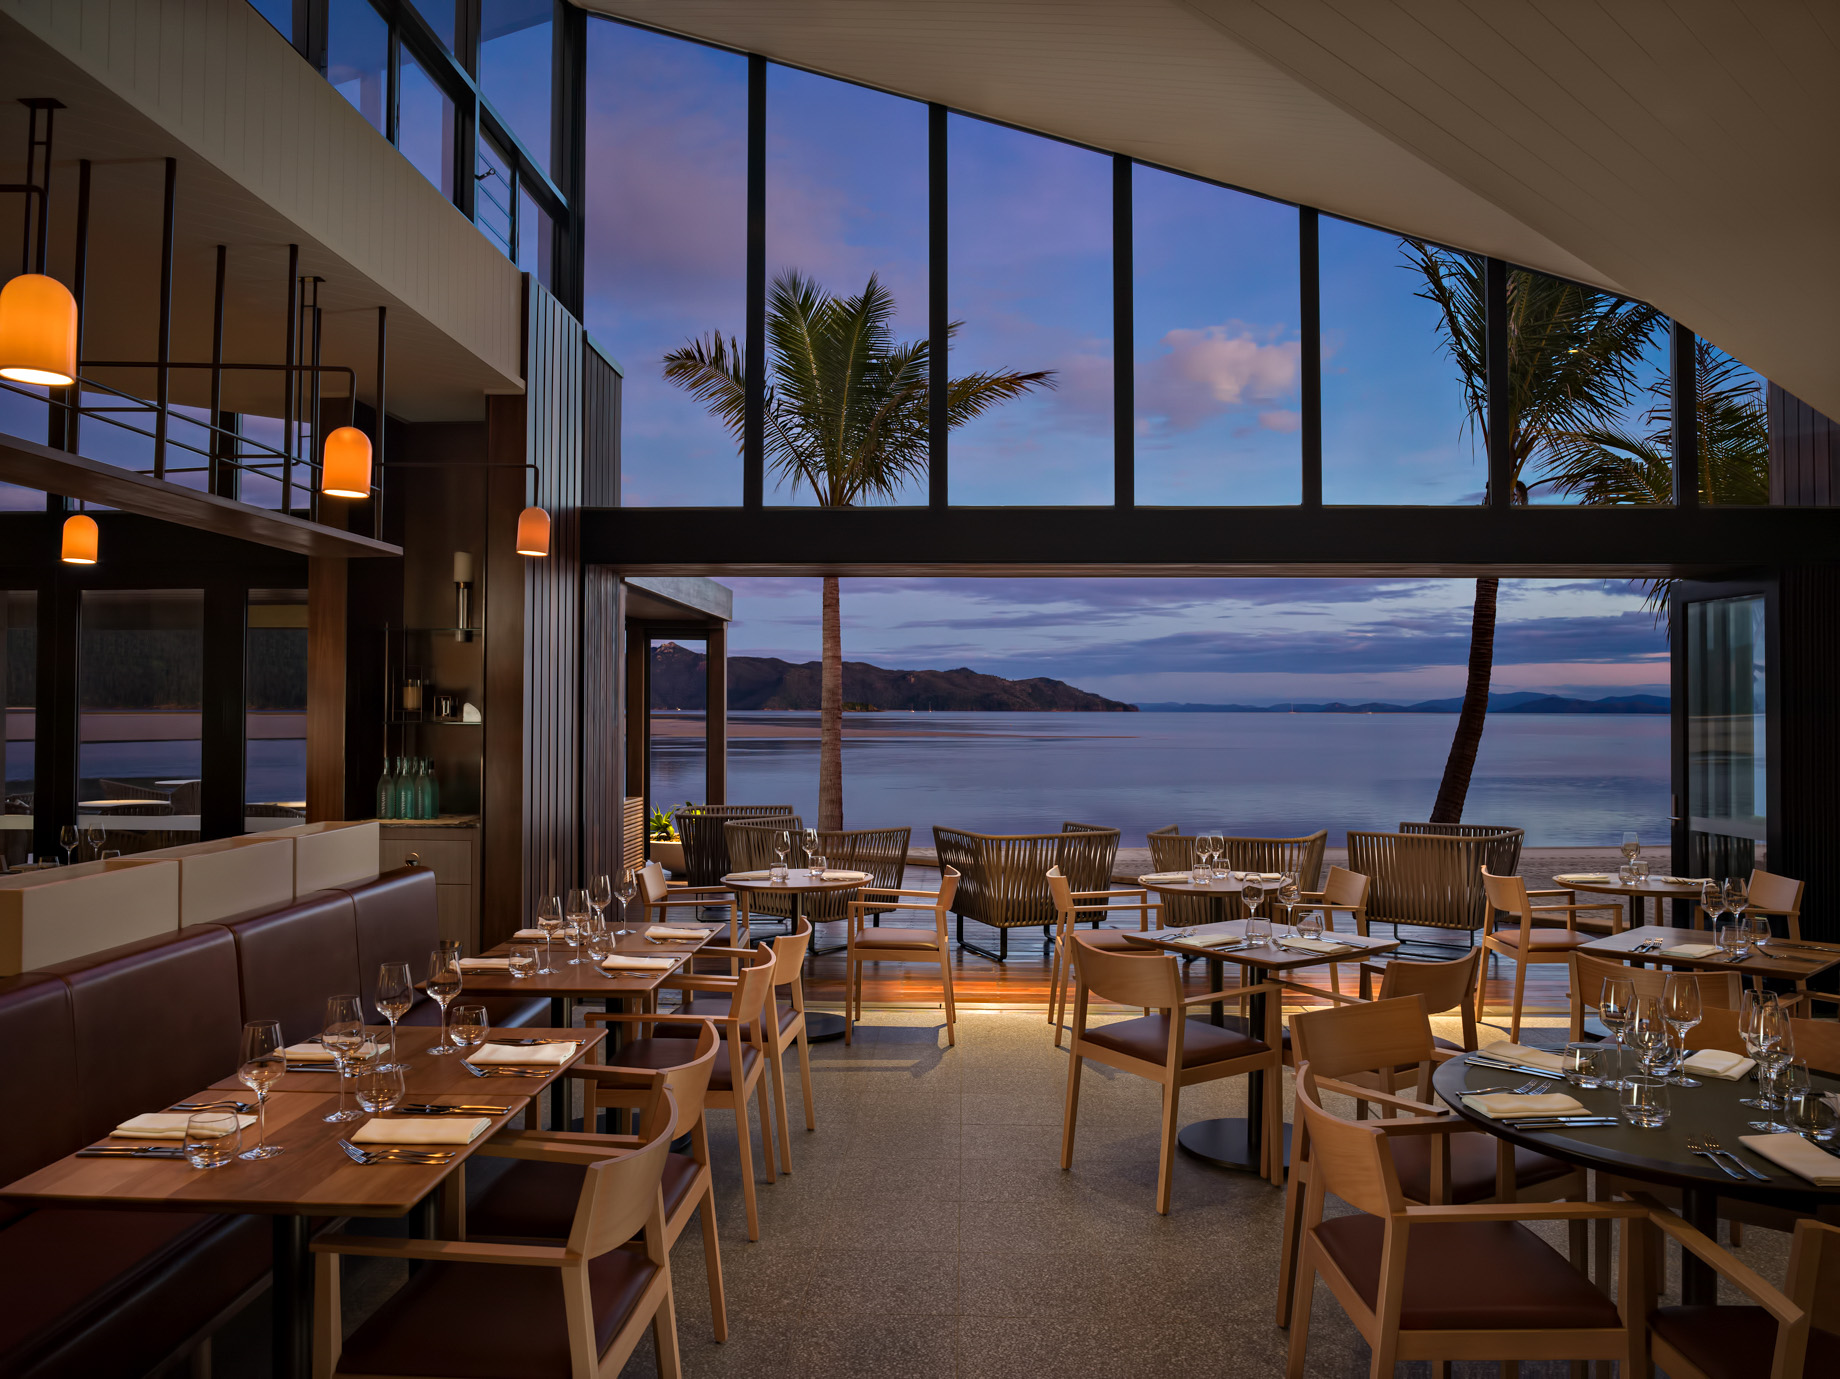 InterContinental Hayman Island Resort – Whitsunday Islands, Australia – Pacific Restaurant Oceanfront View Twilight